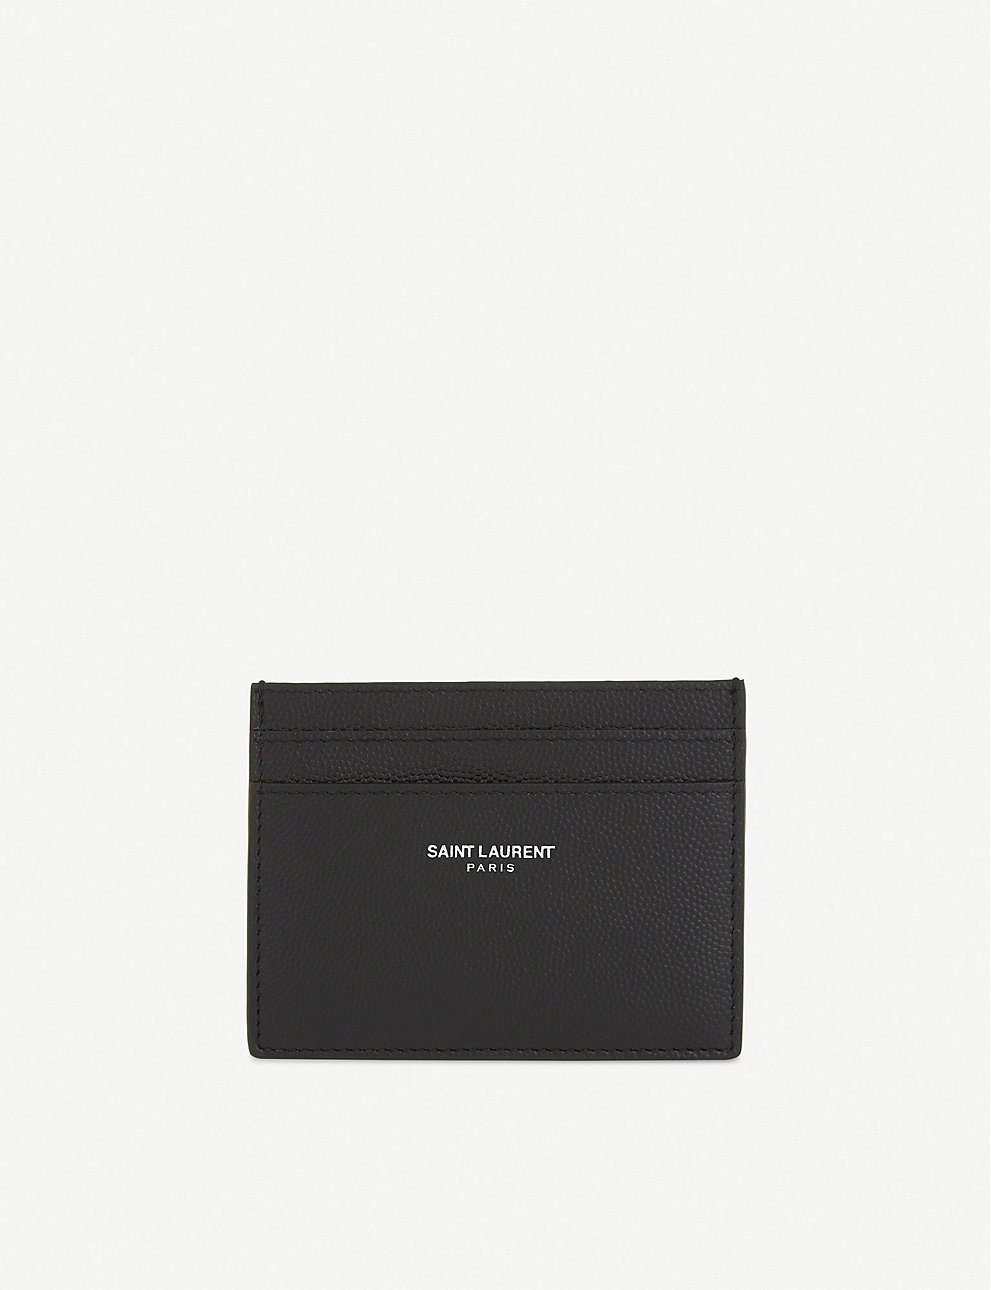 Black YSL-plaque leather cardholder, Saint Laurent